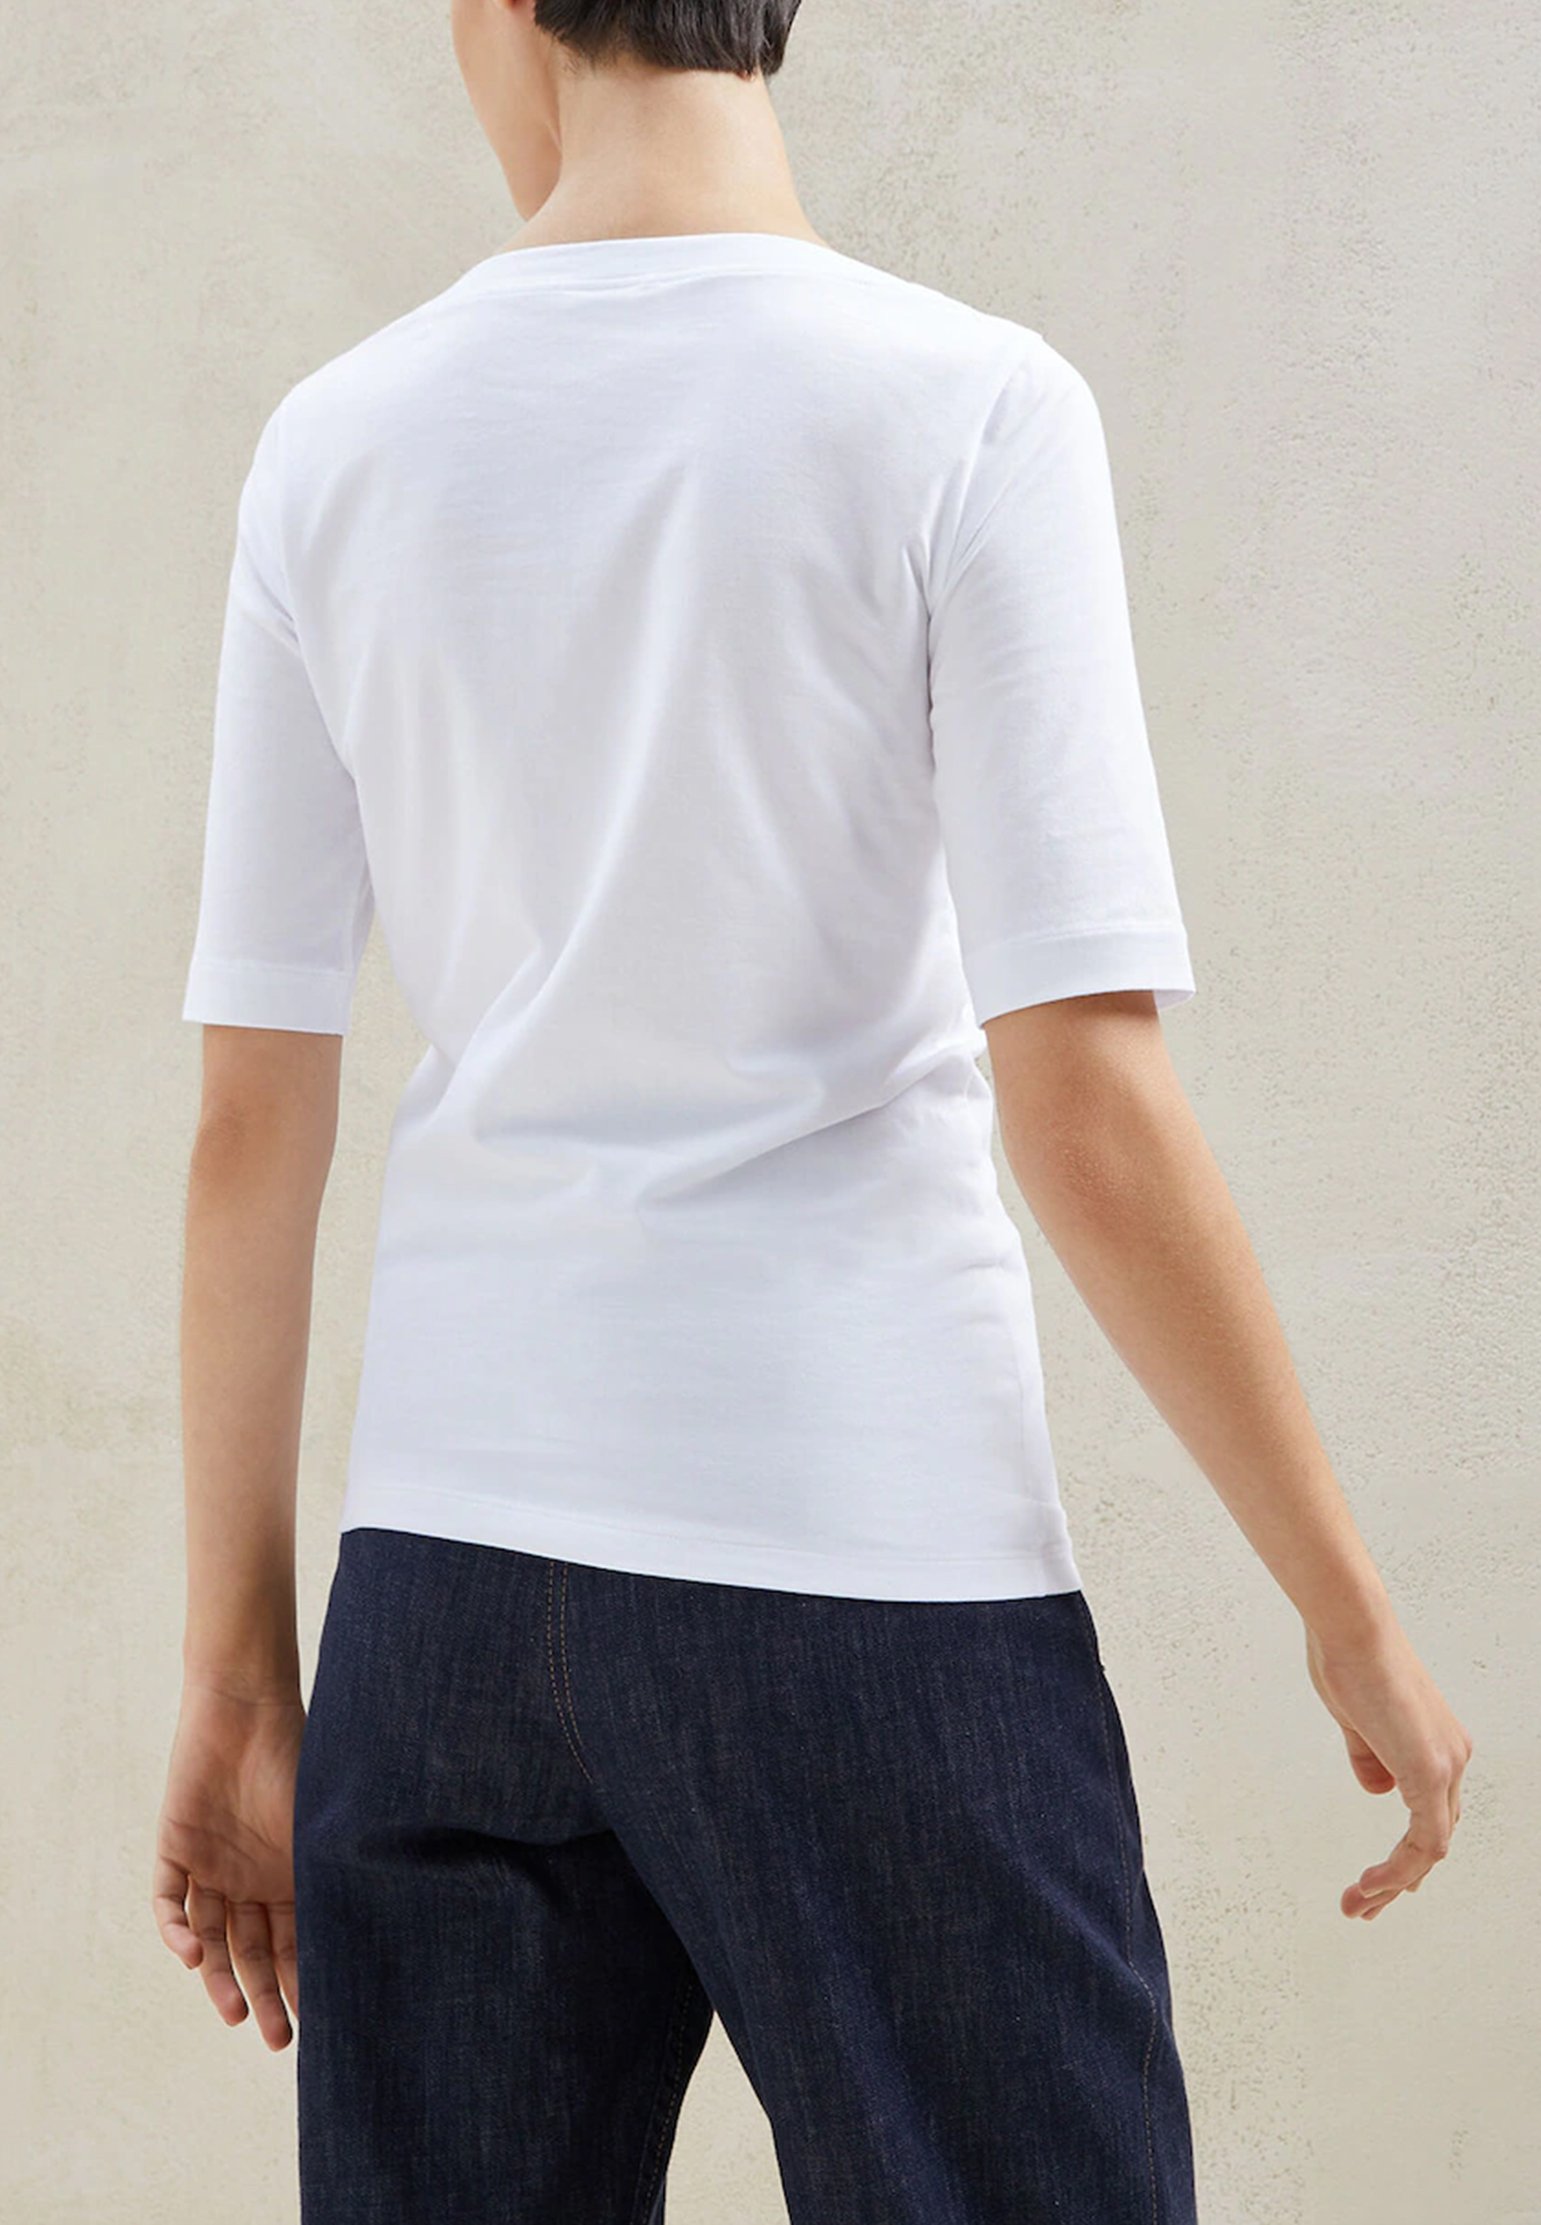 T-Shirt BRUNELLO CUCINELLI Color: white (Code: 639) in online store Allure